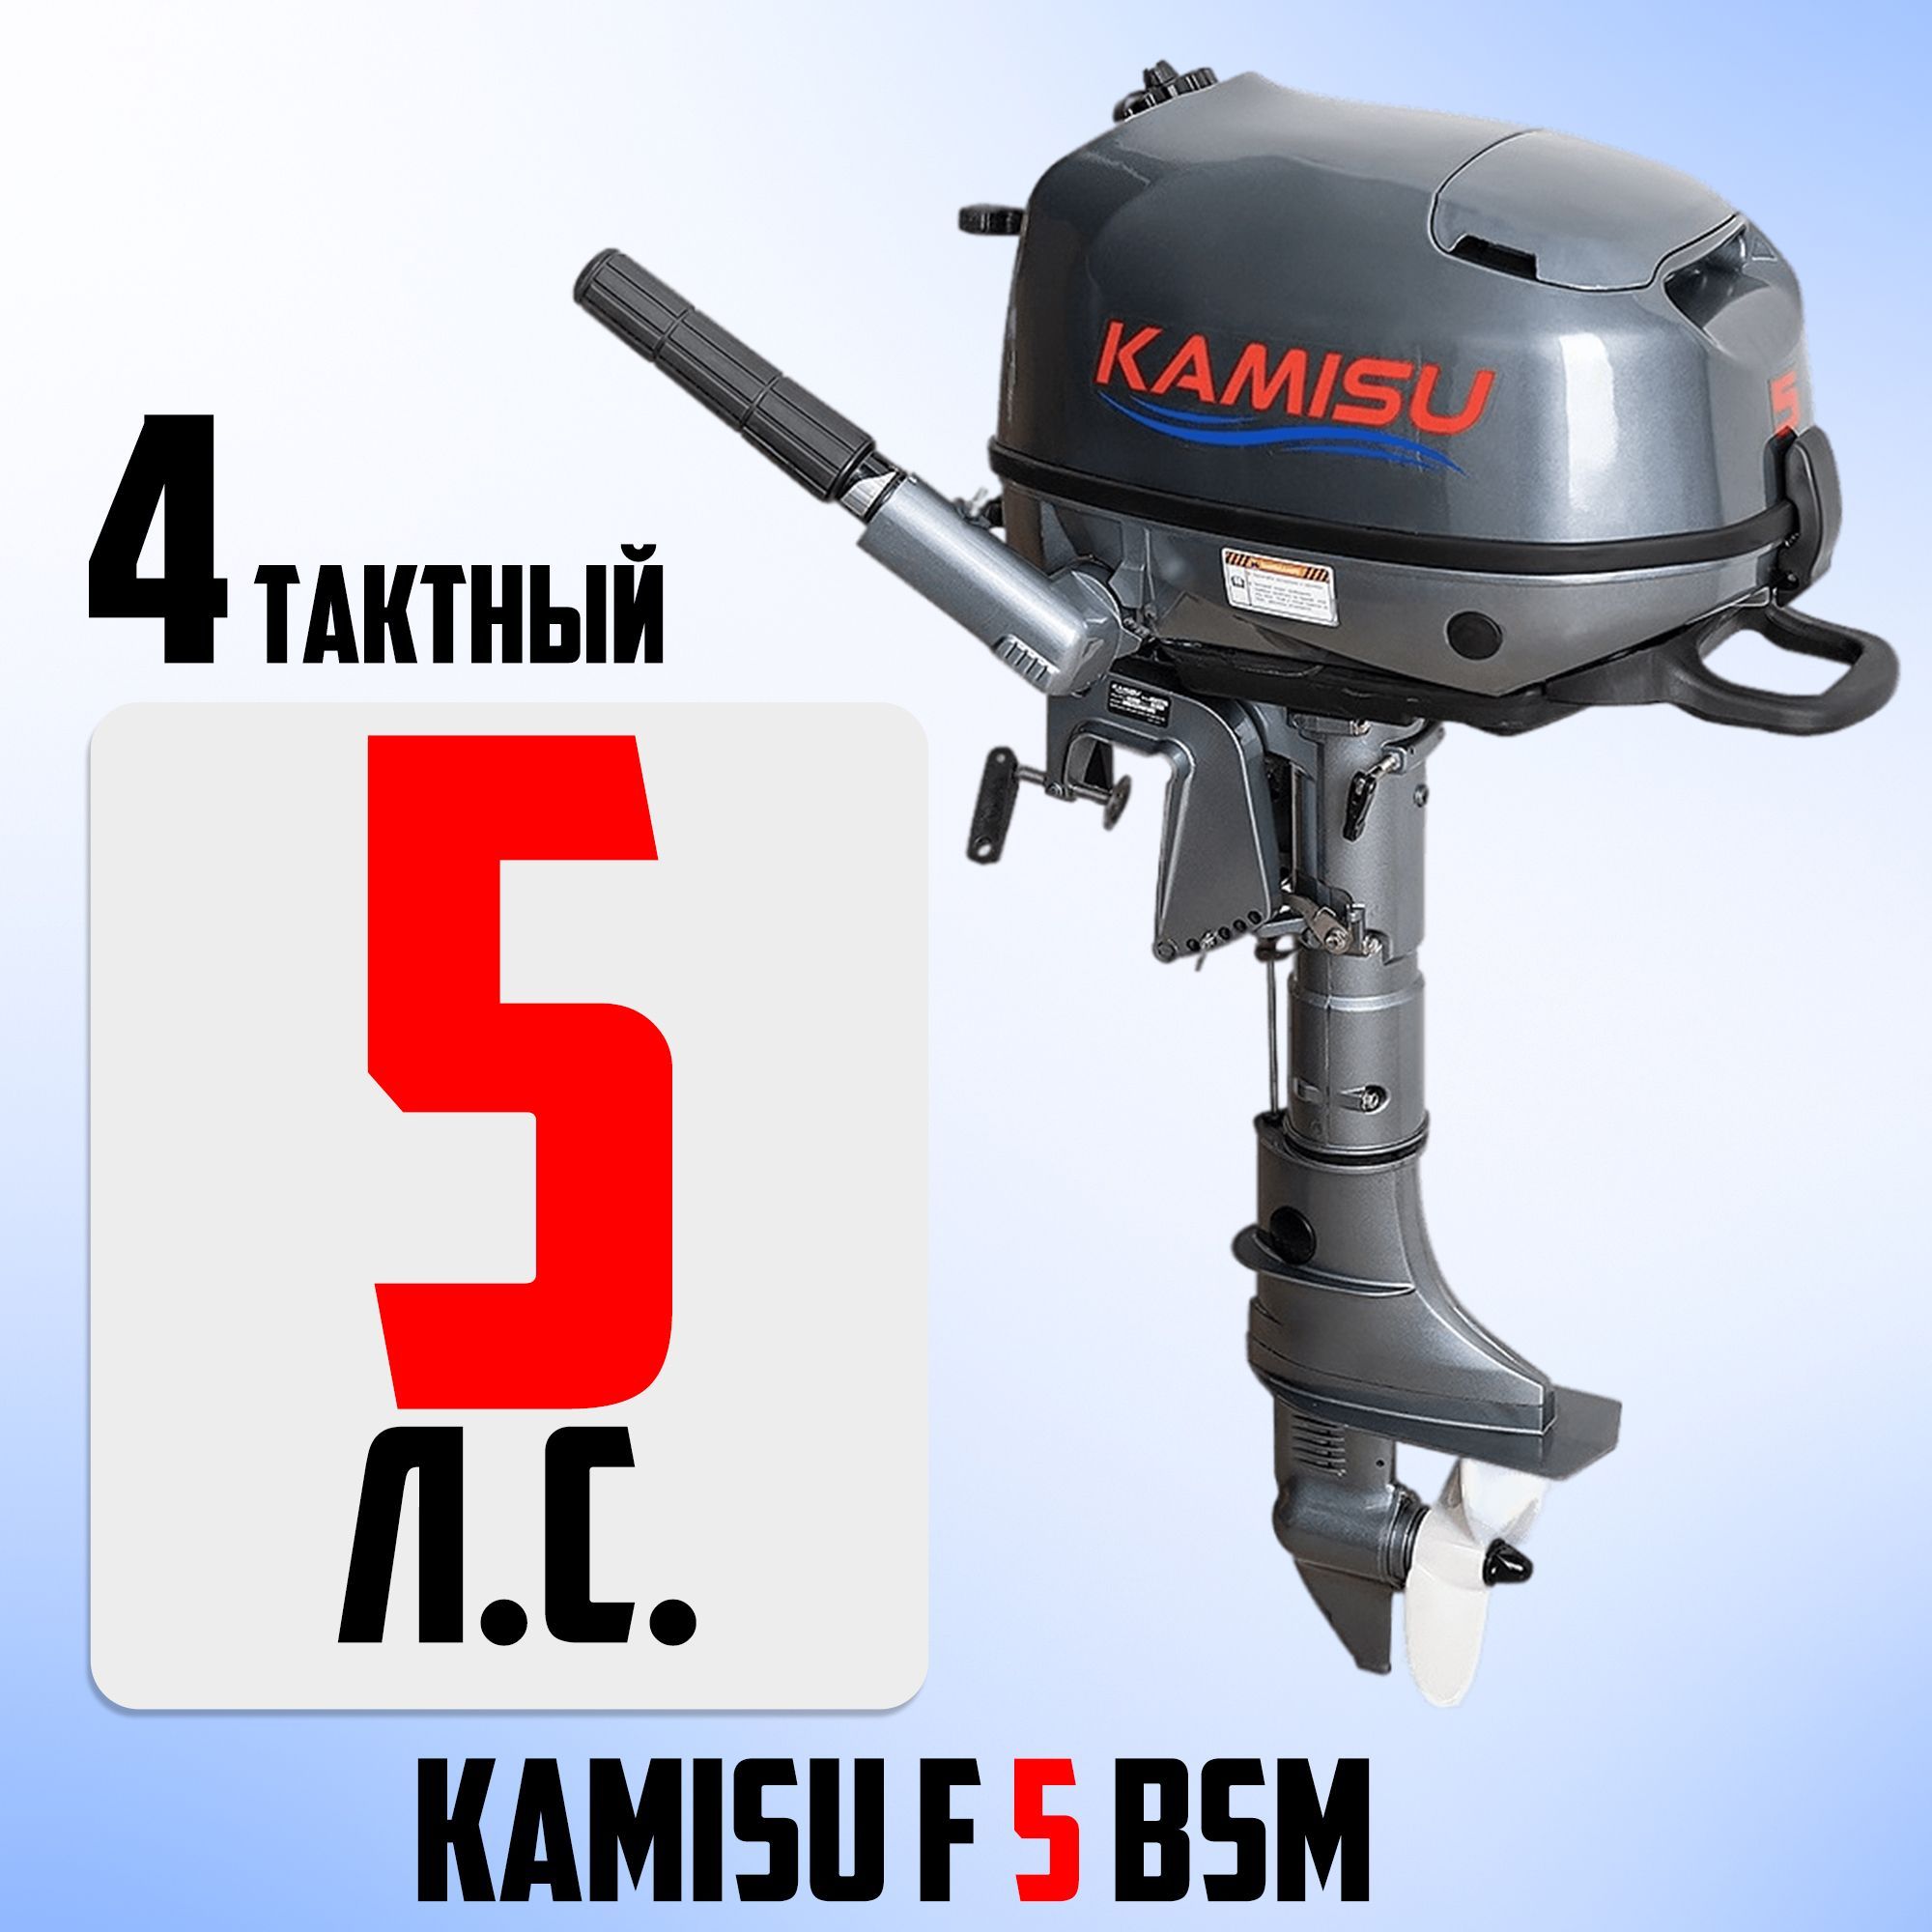 Kamisu лодочные моторы. Kamisu f 5 BMS 4-Х тактный. Hdx t 3.6 CBMS отзывы. Лодочный мотор Moratti buddy 34.